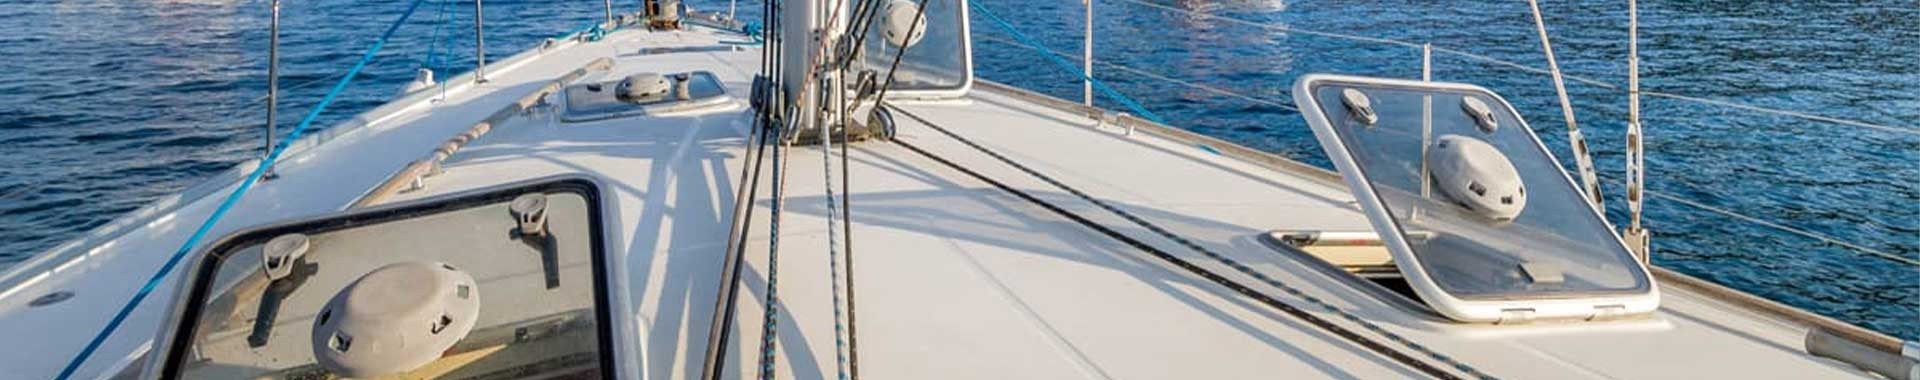 Boat deck hatch - Comptoir Nautique